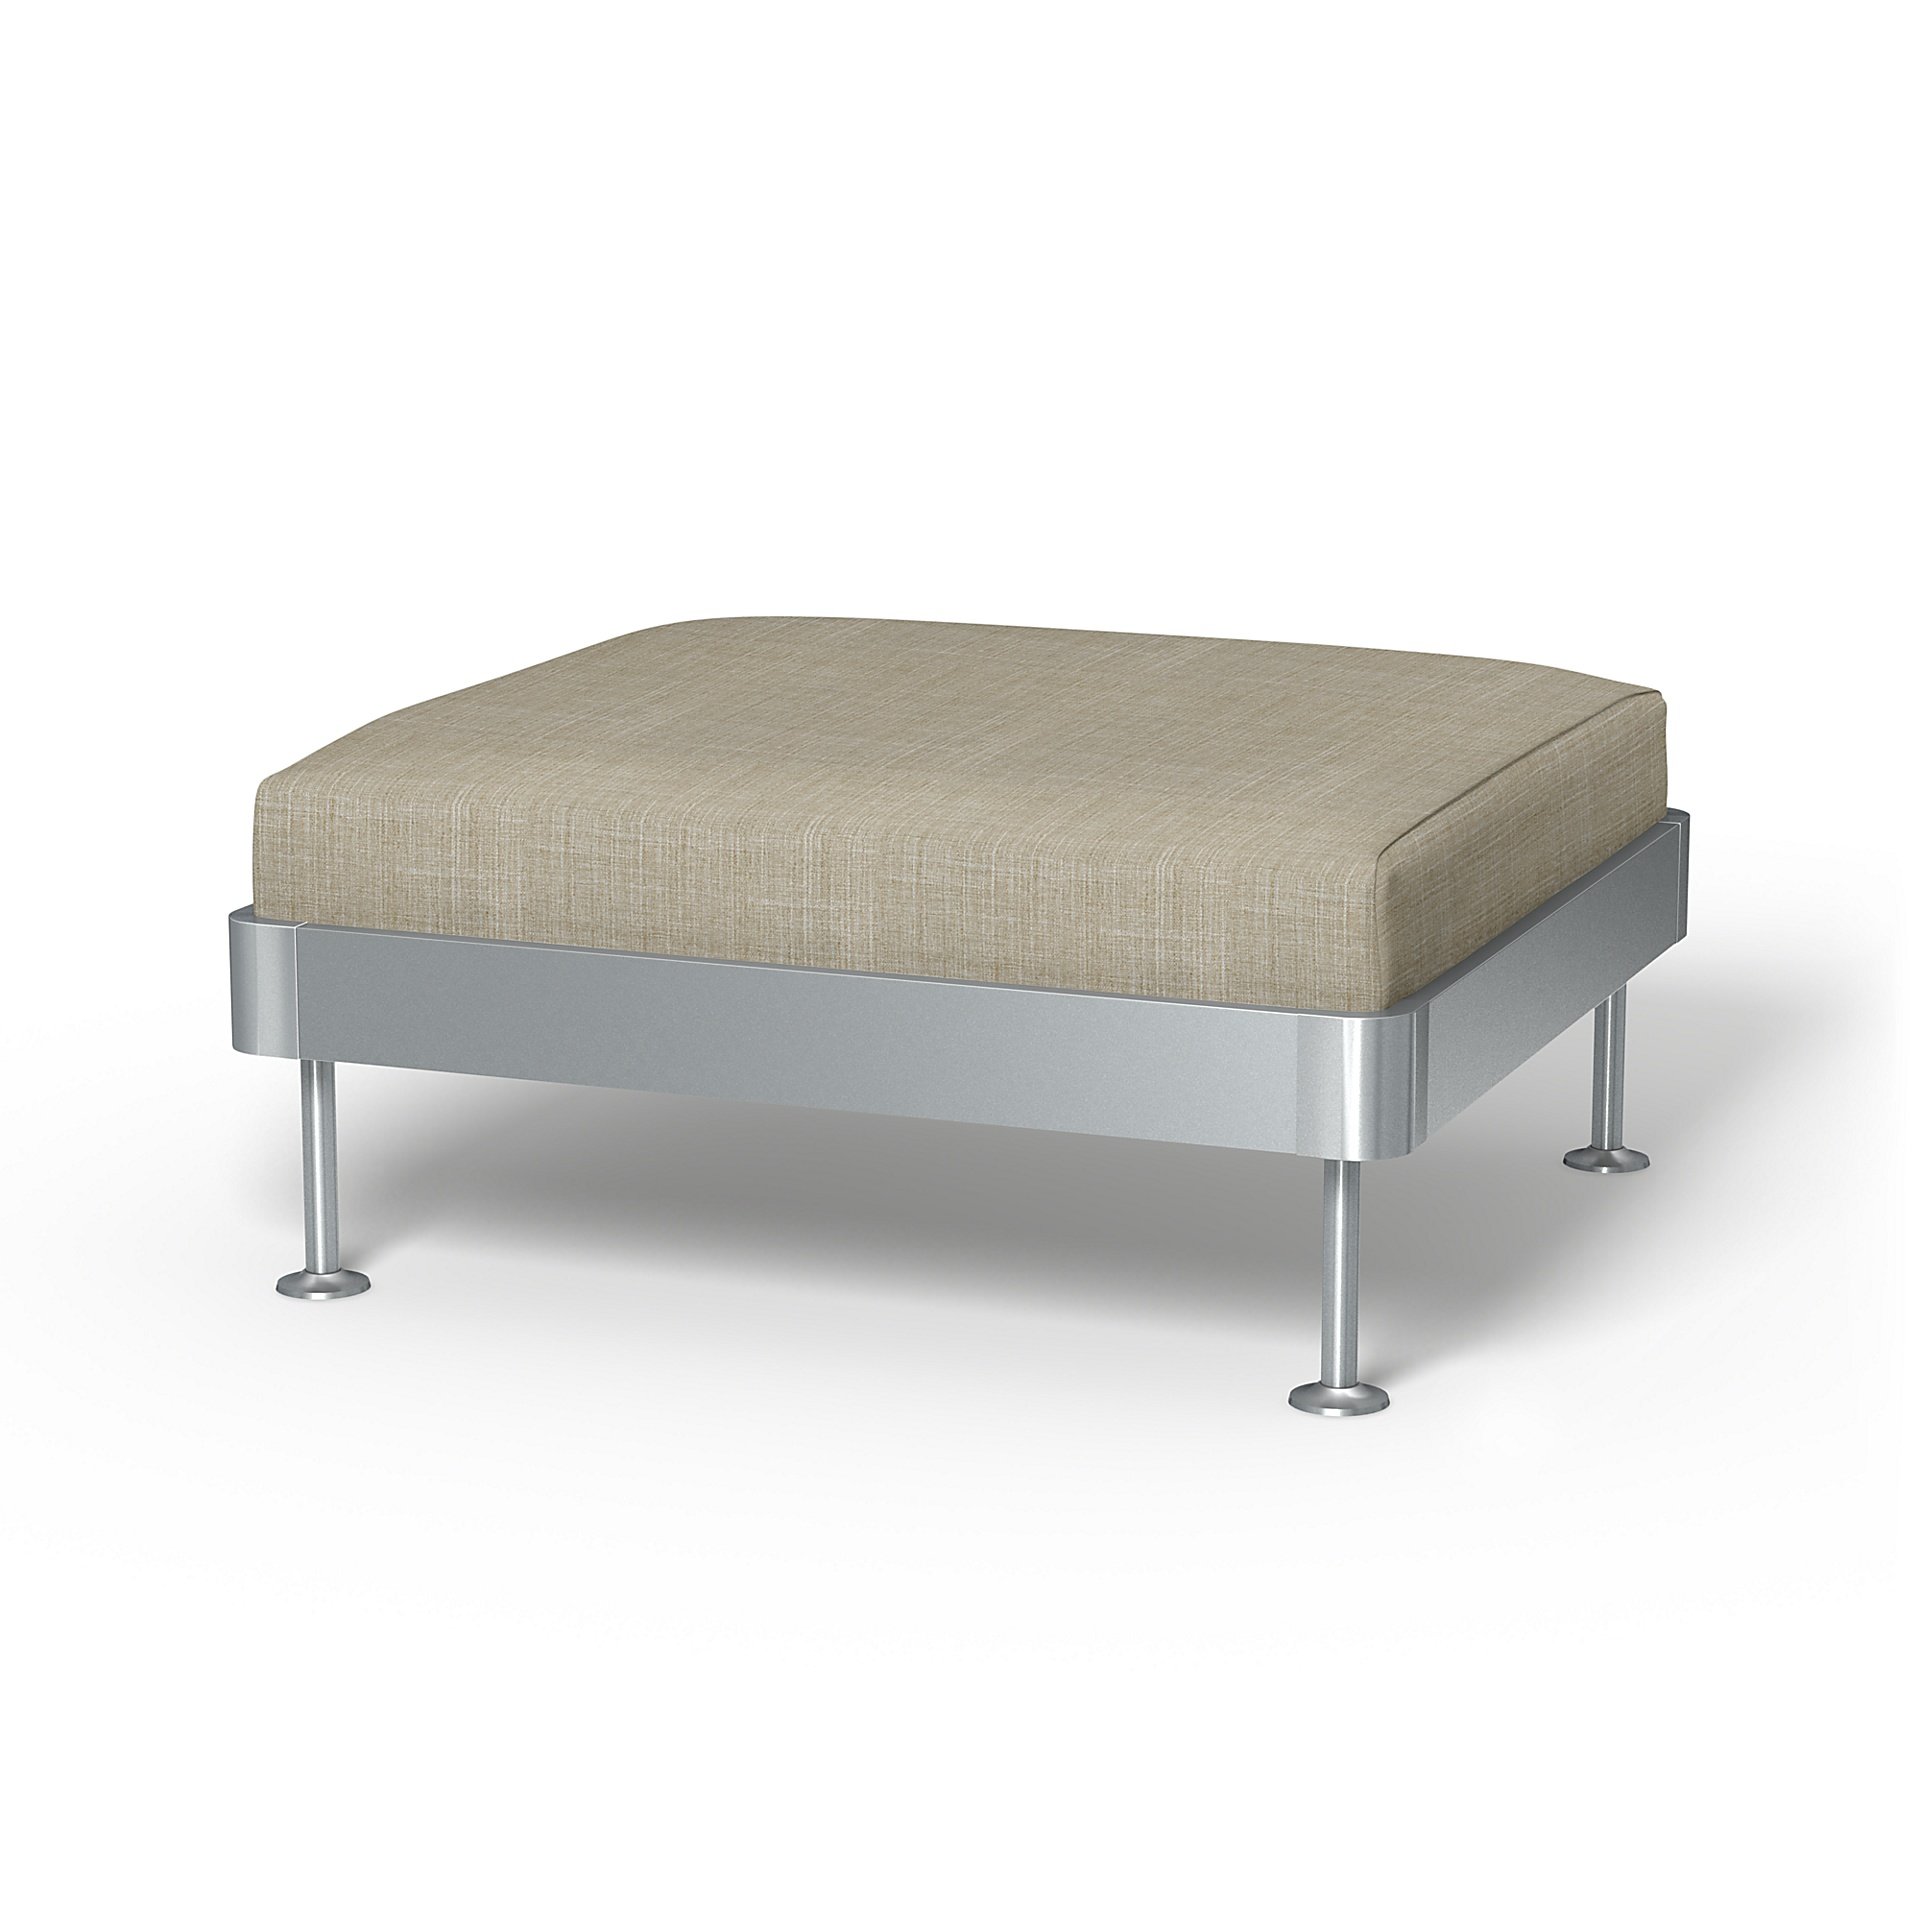 IKEA - Delaktig 1 Seat Platform Cover, Sand Beige, Boucle & Texture - Bemz